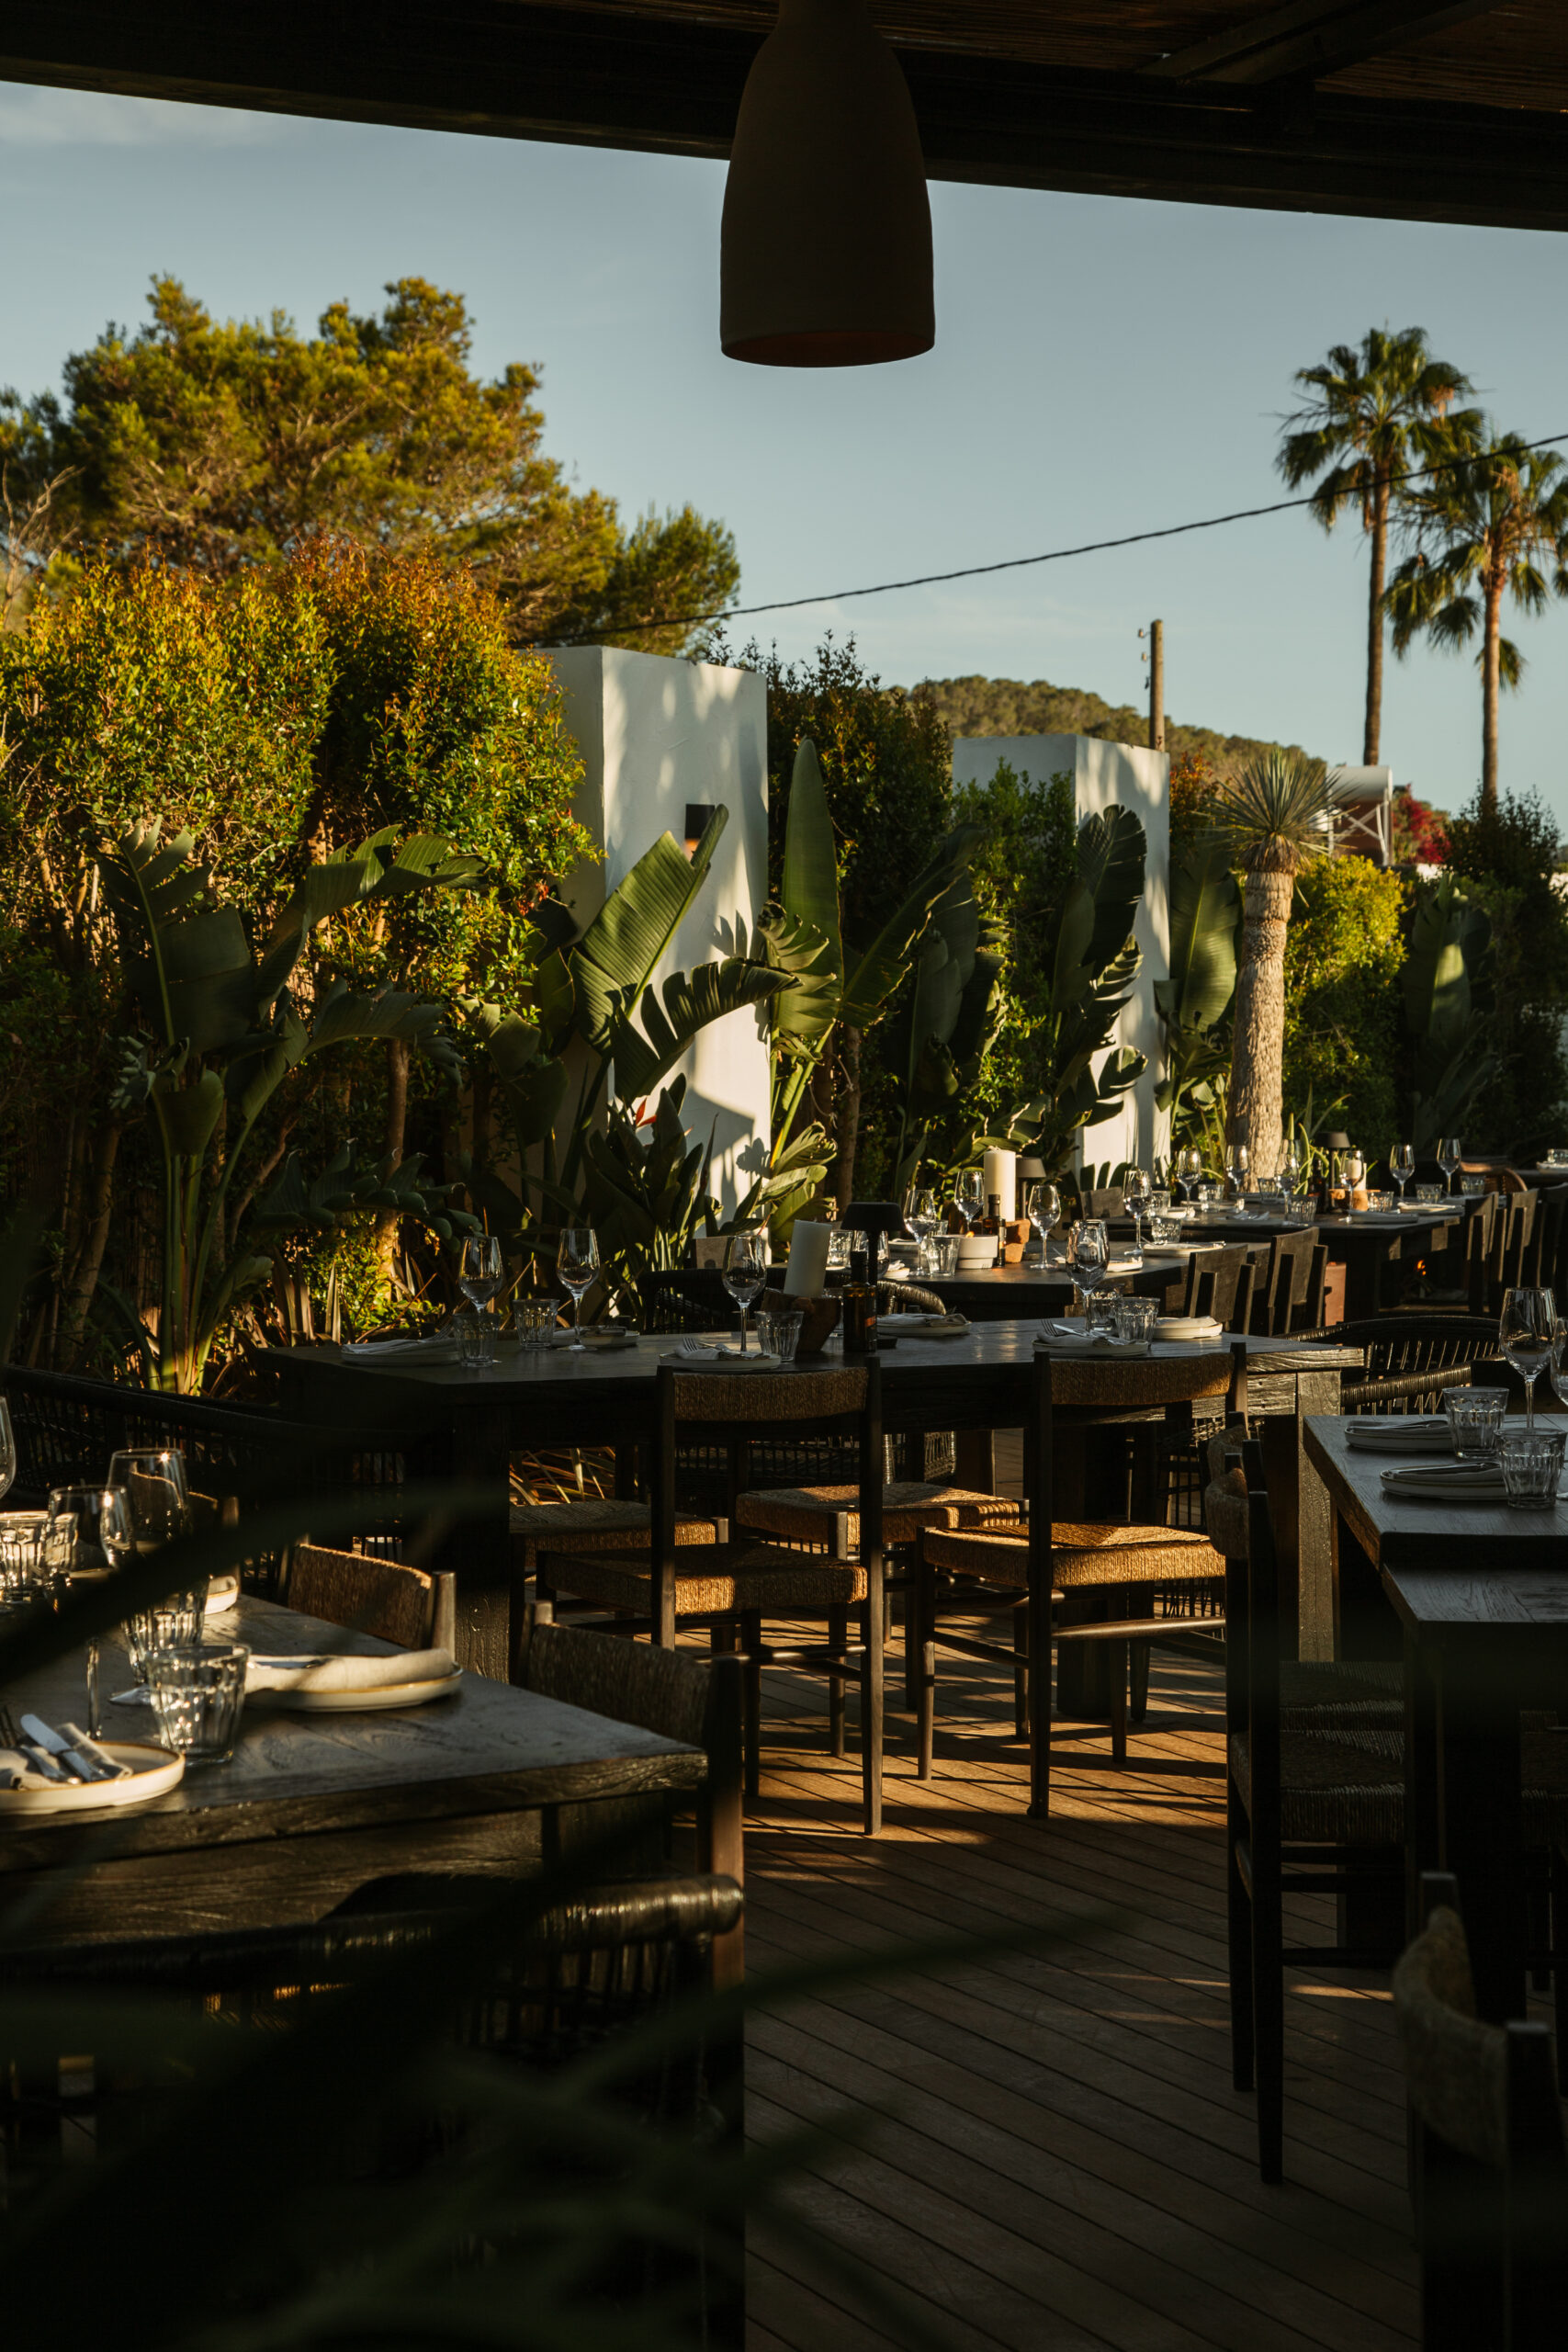 Interior restaurant dining with greenery at The Main Ibiza